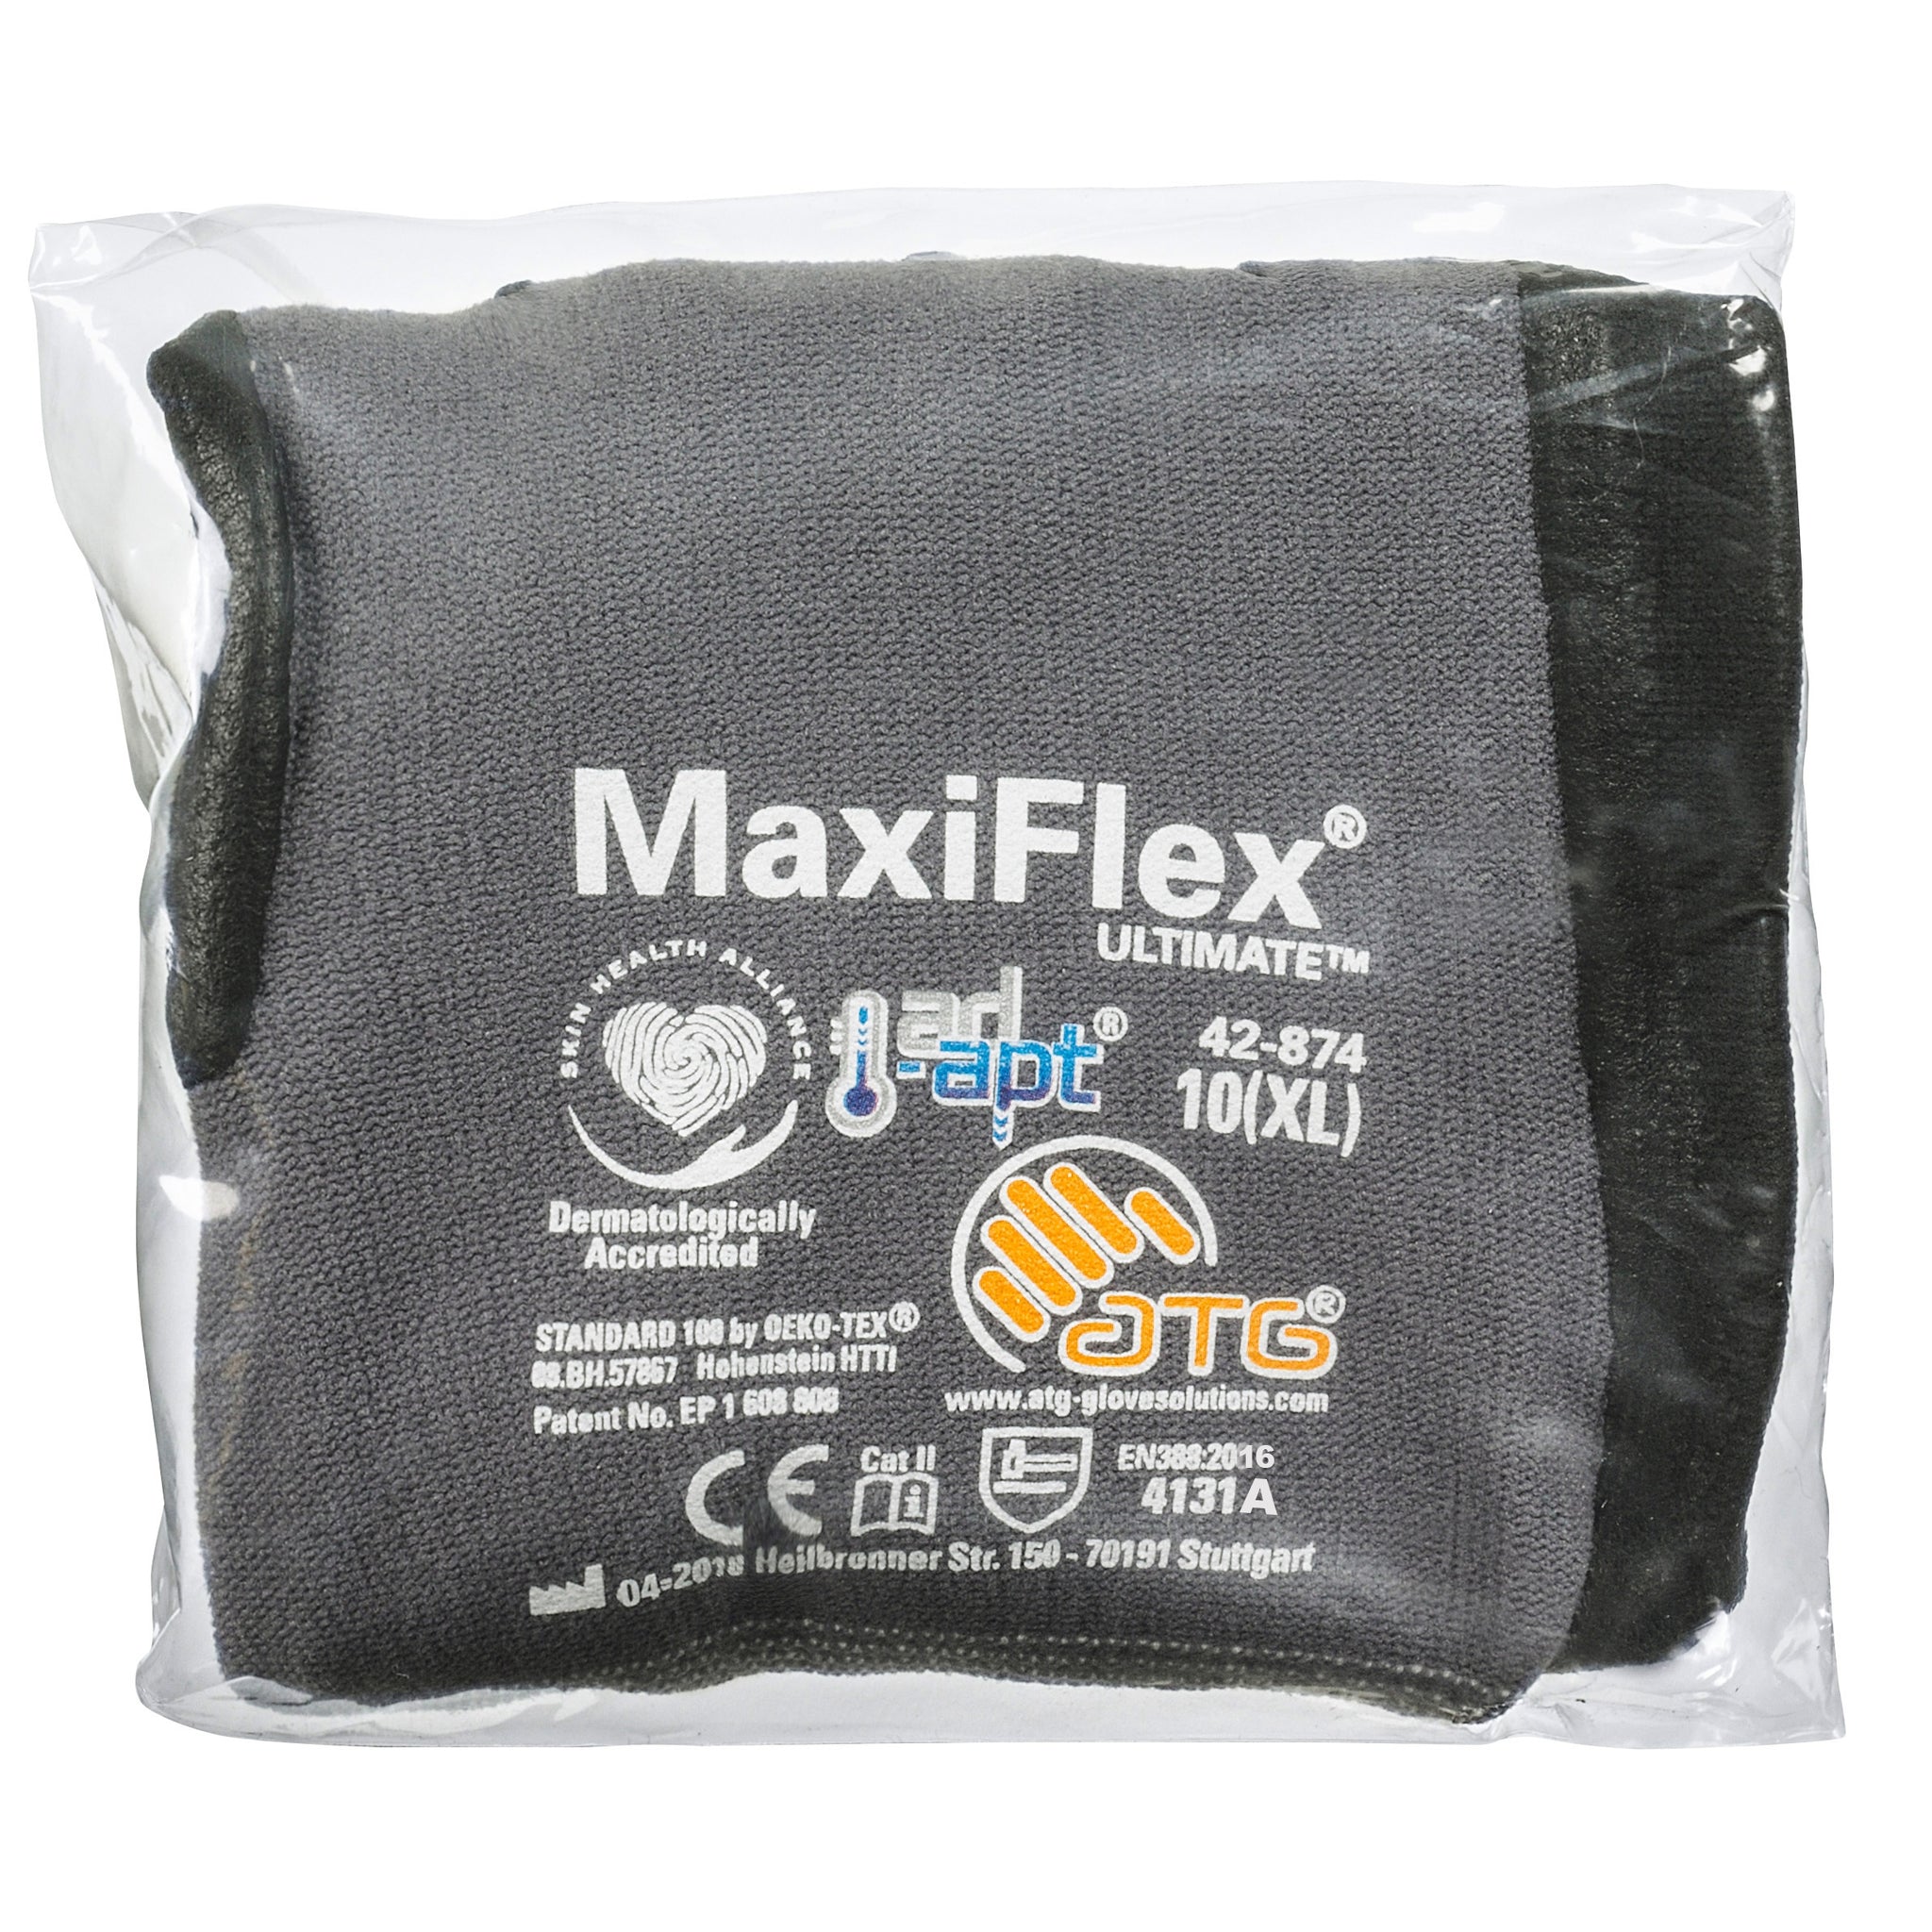 MaxiFlex® Ultimate™ AD-APT® Nylon-Strickhandschuhe (42-874V), Automatenverp.-arbeitskleidung-gmbh